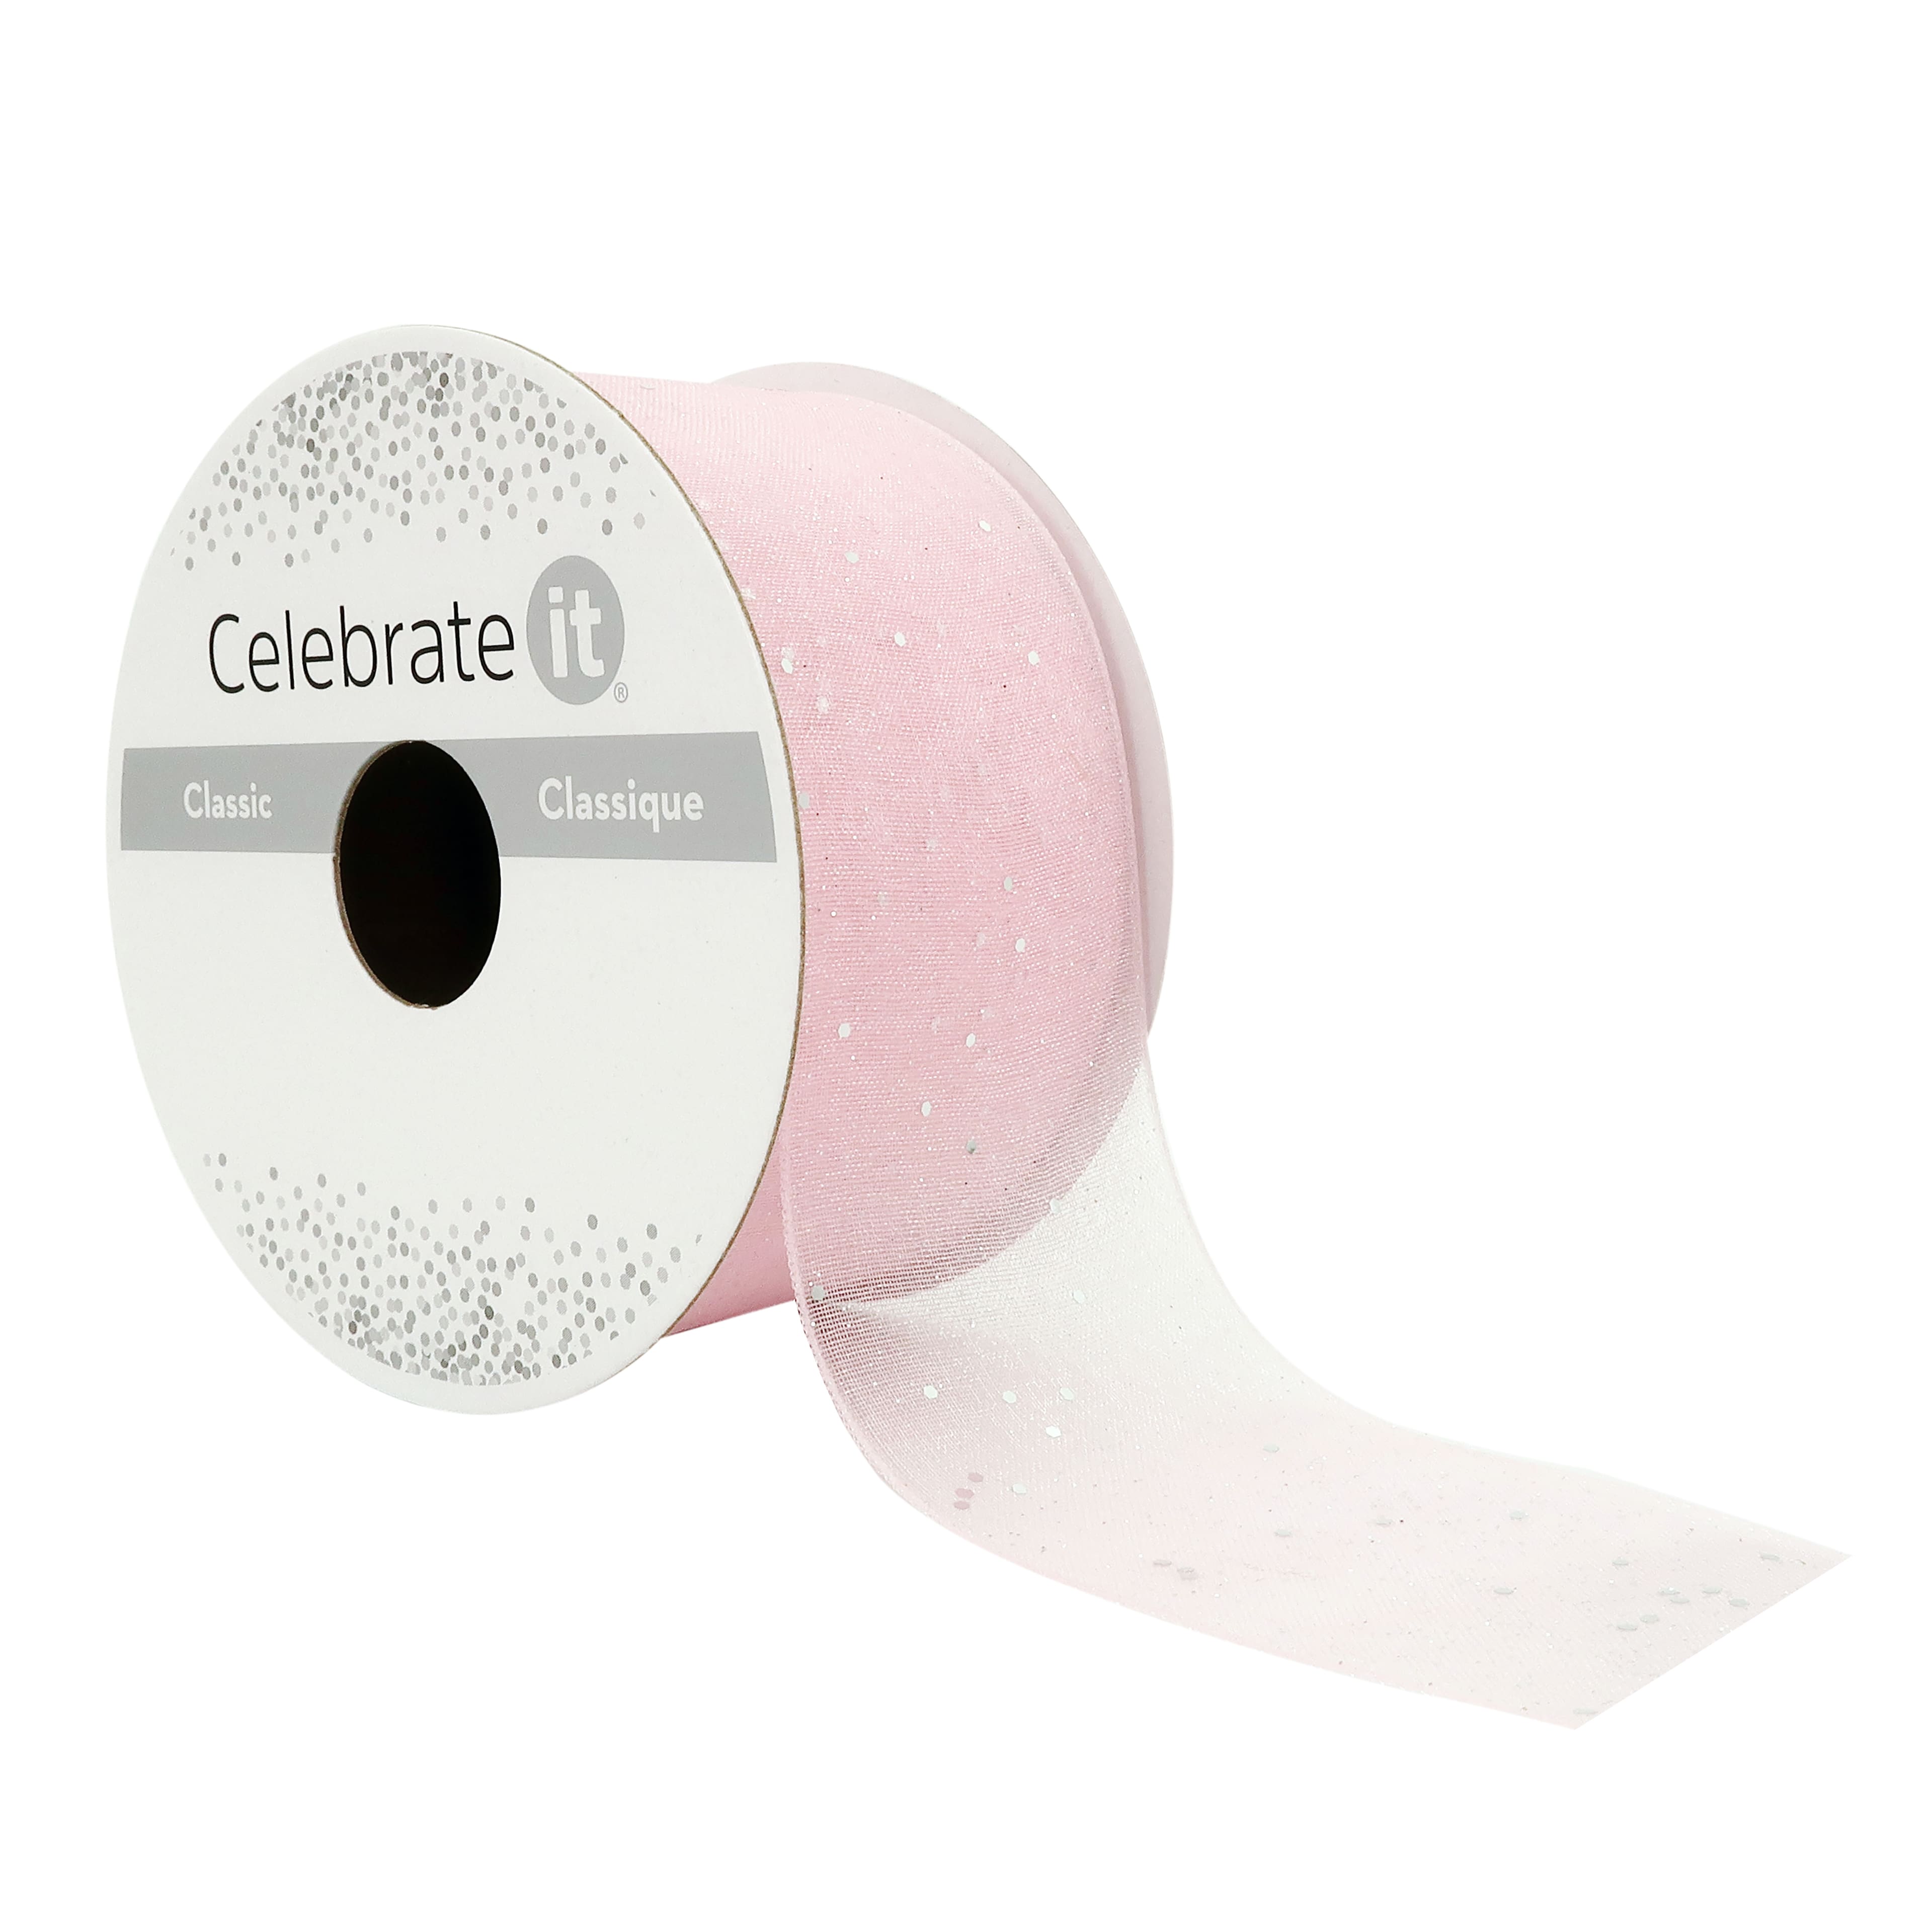 5.375 Encrusted Glitter Ribbon by Celebrate It®